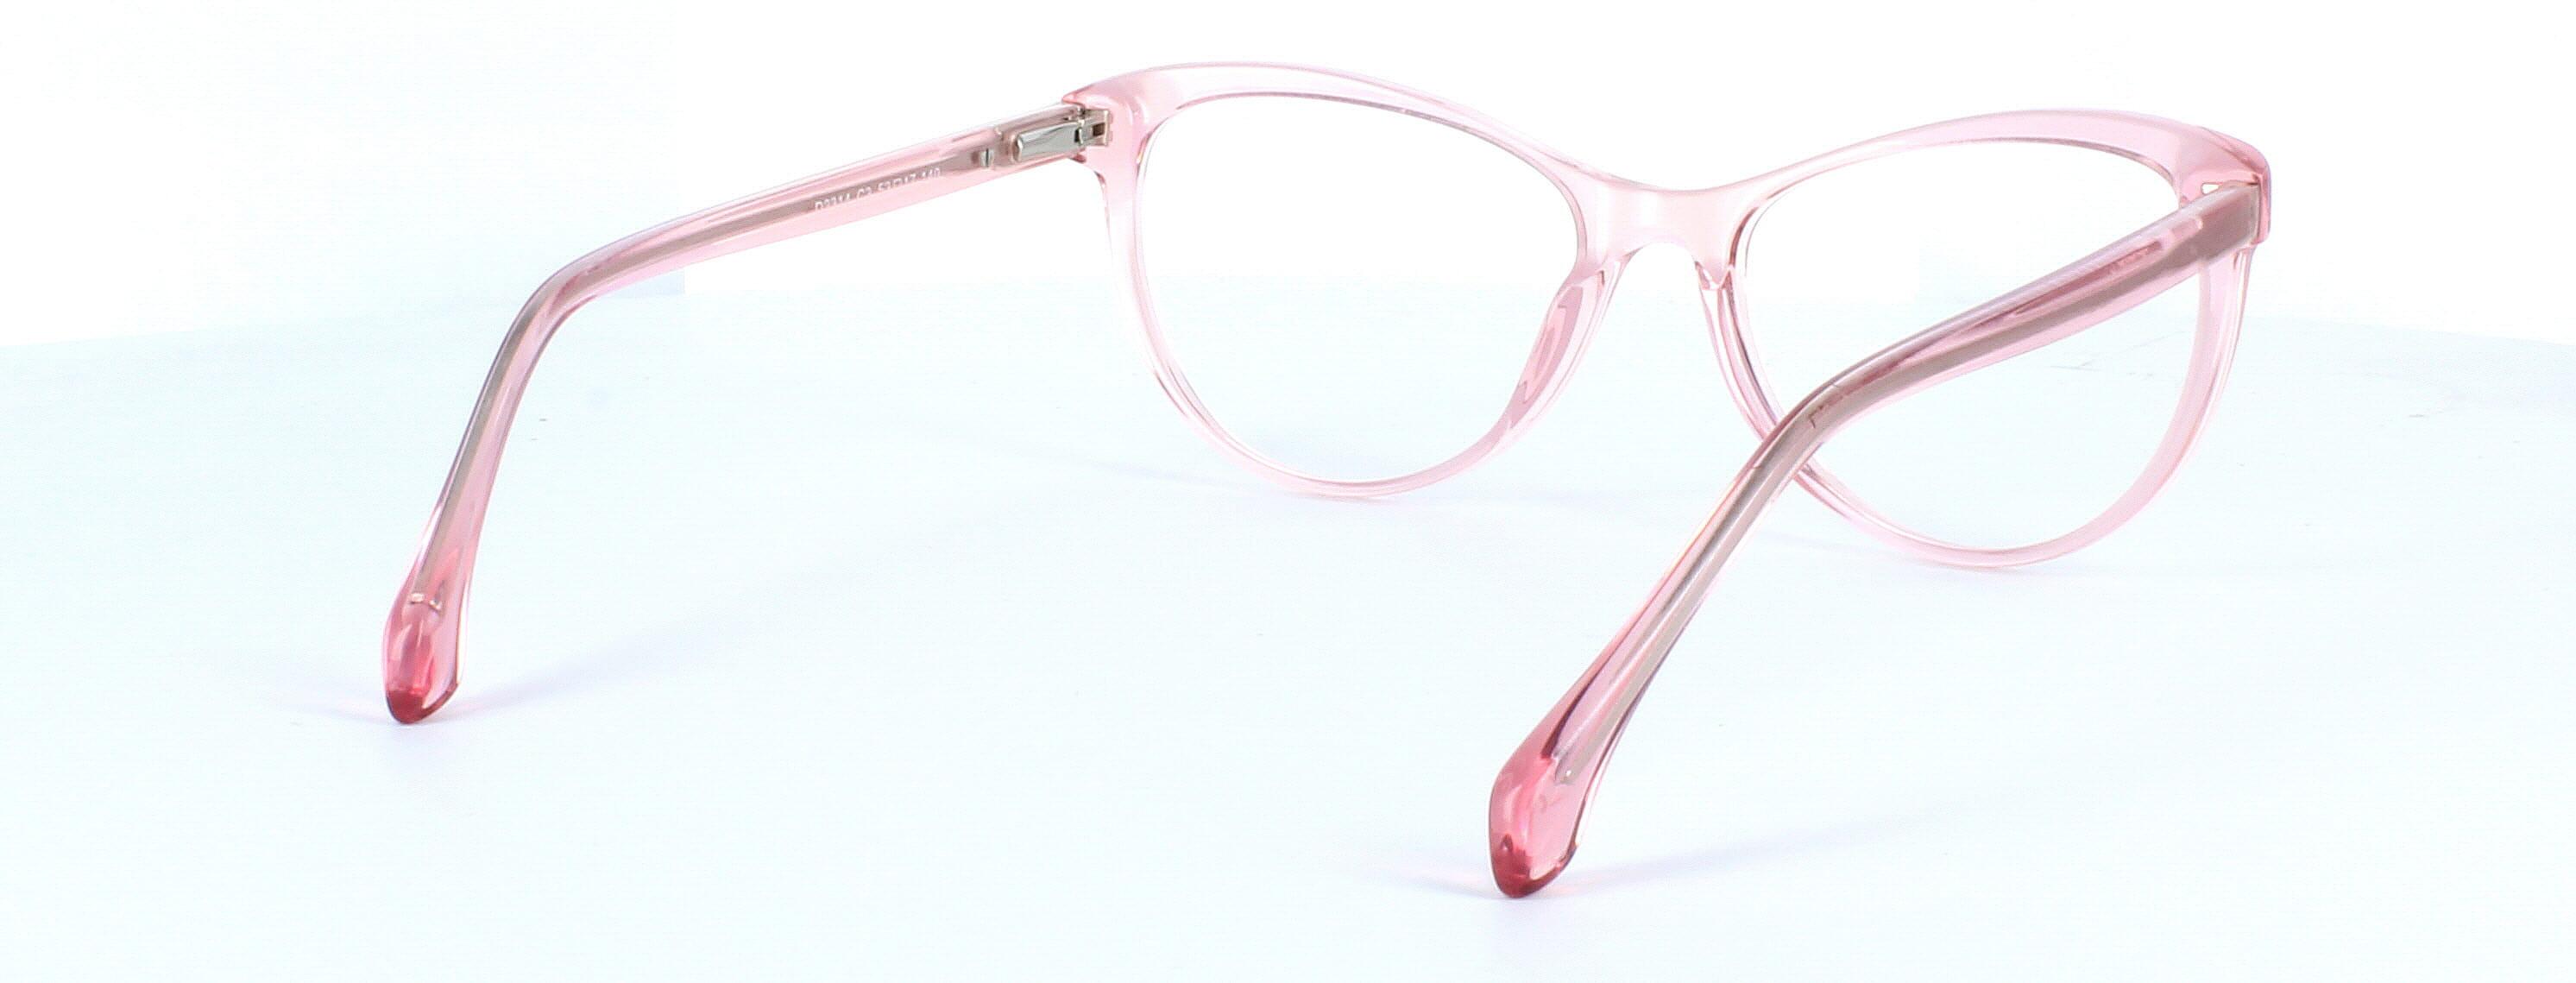 Hadlow - Ladies crystal pink cat eye shaped acetate glasses frame - image view 4